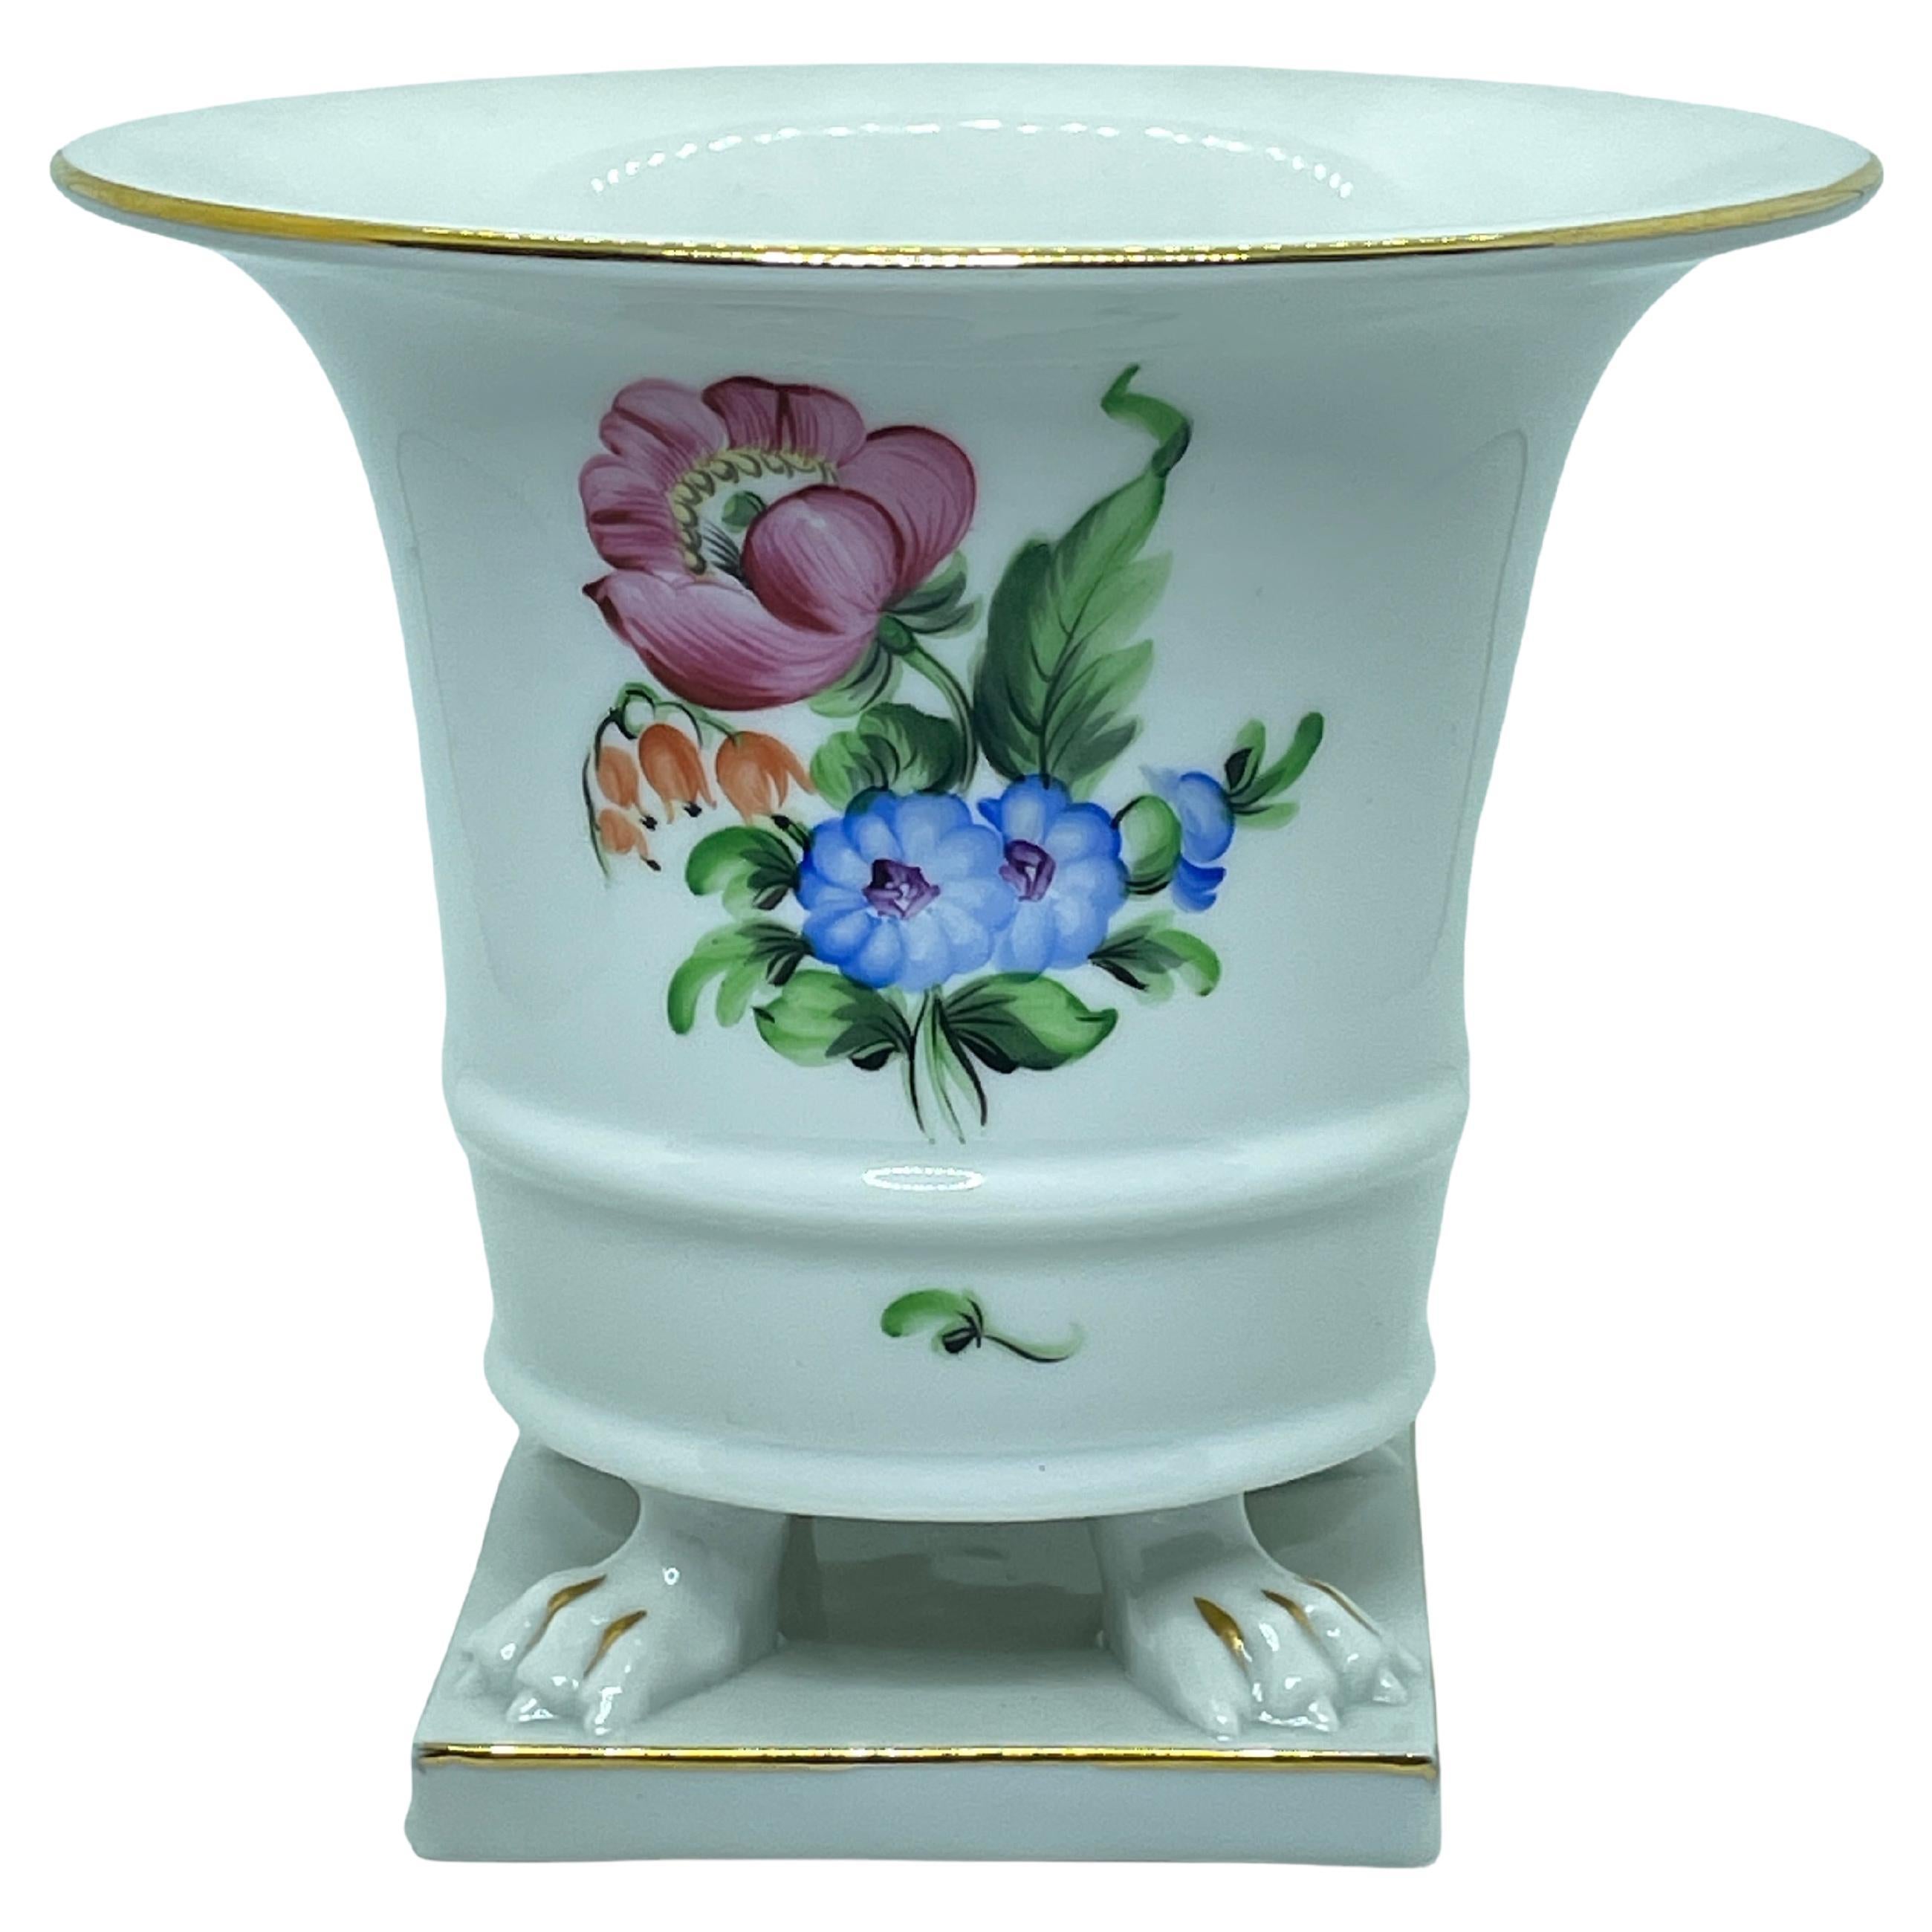 Herend Decor "Flower Bouquet" Vase Hand Painted Hungarian Porcelain, Modern